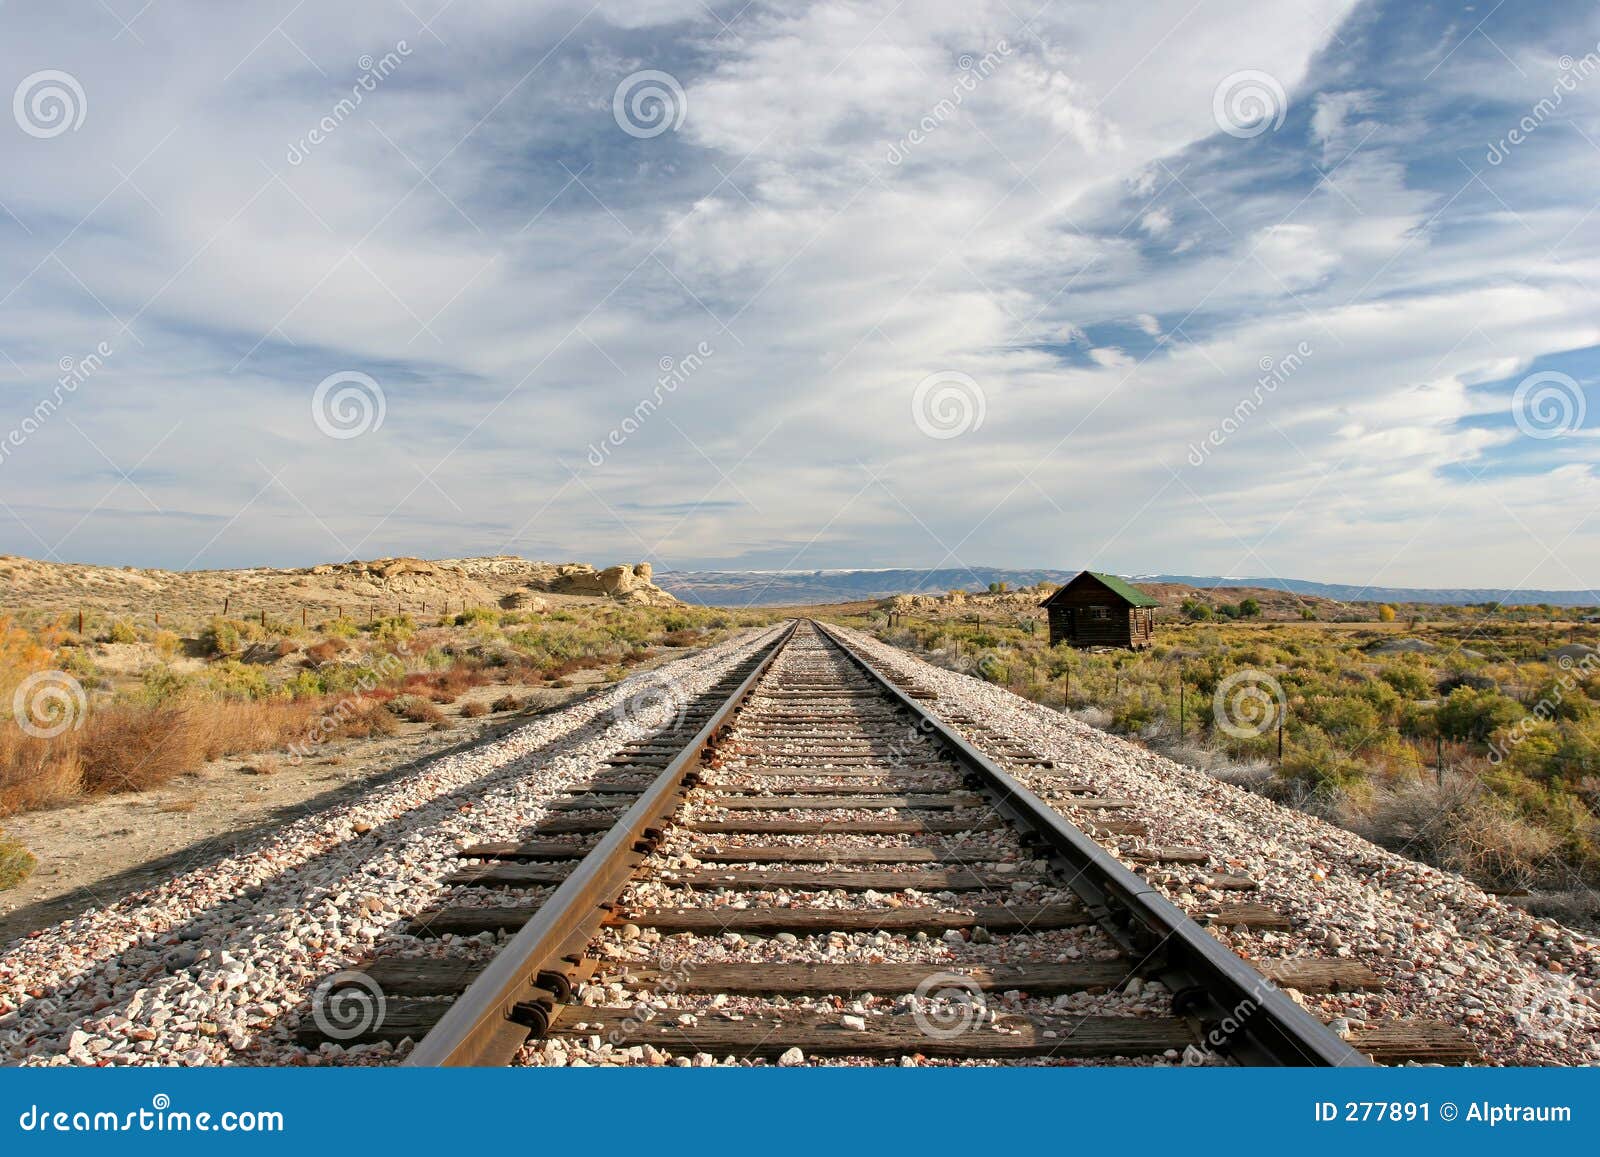 midwest train tracks